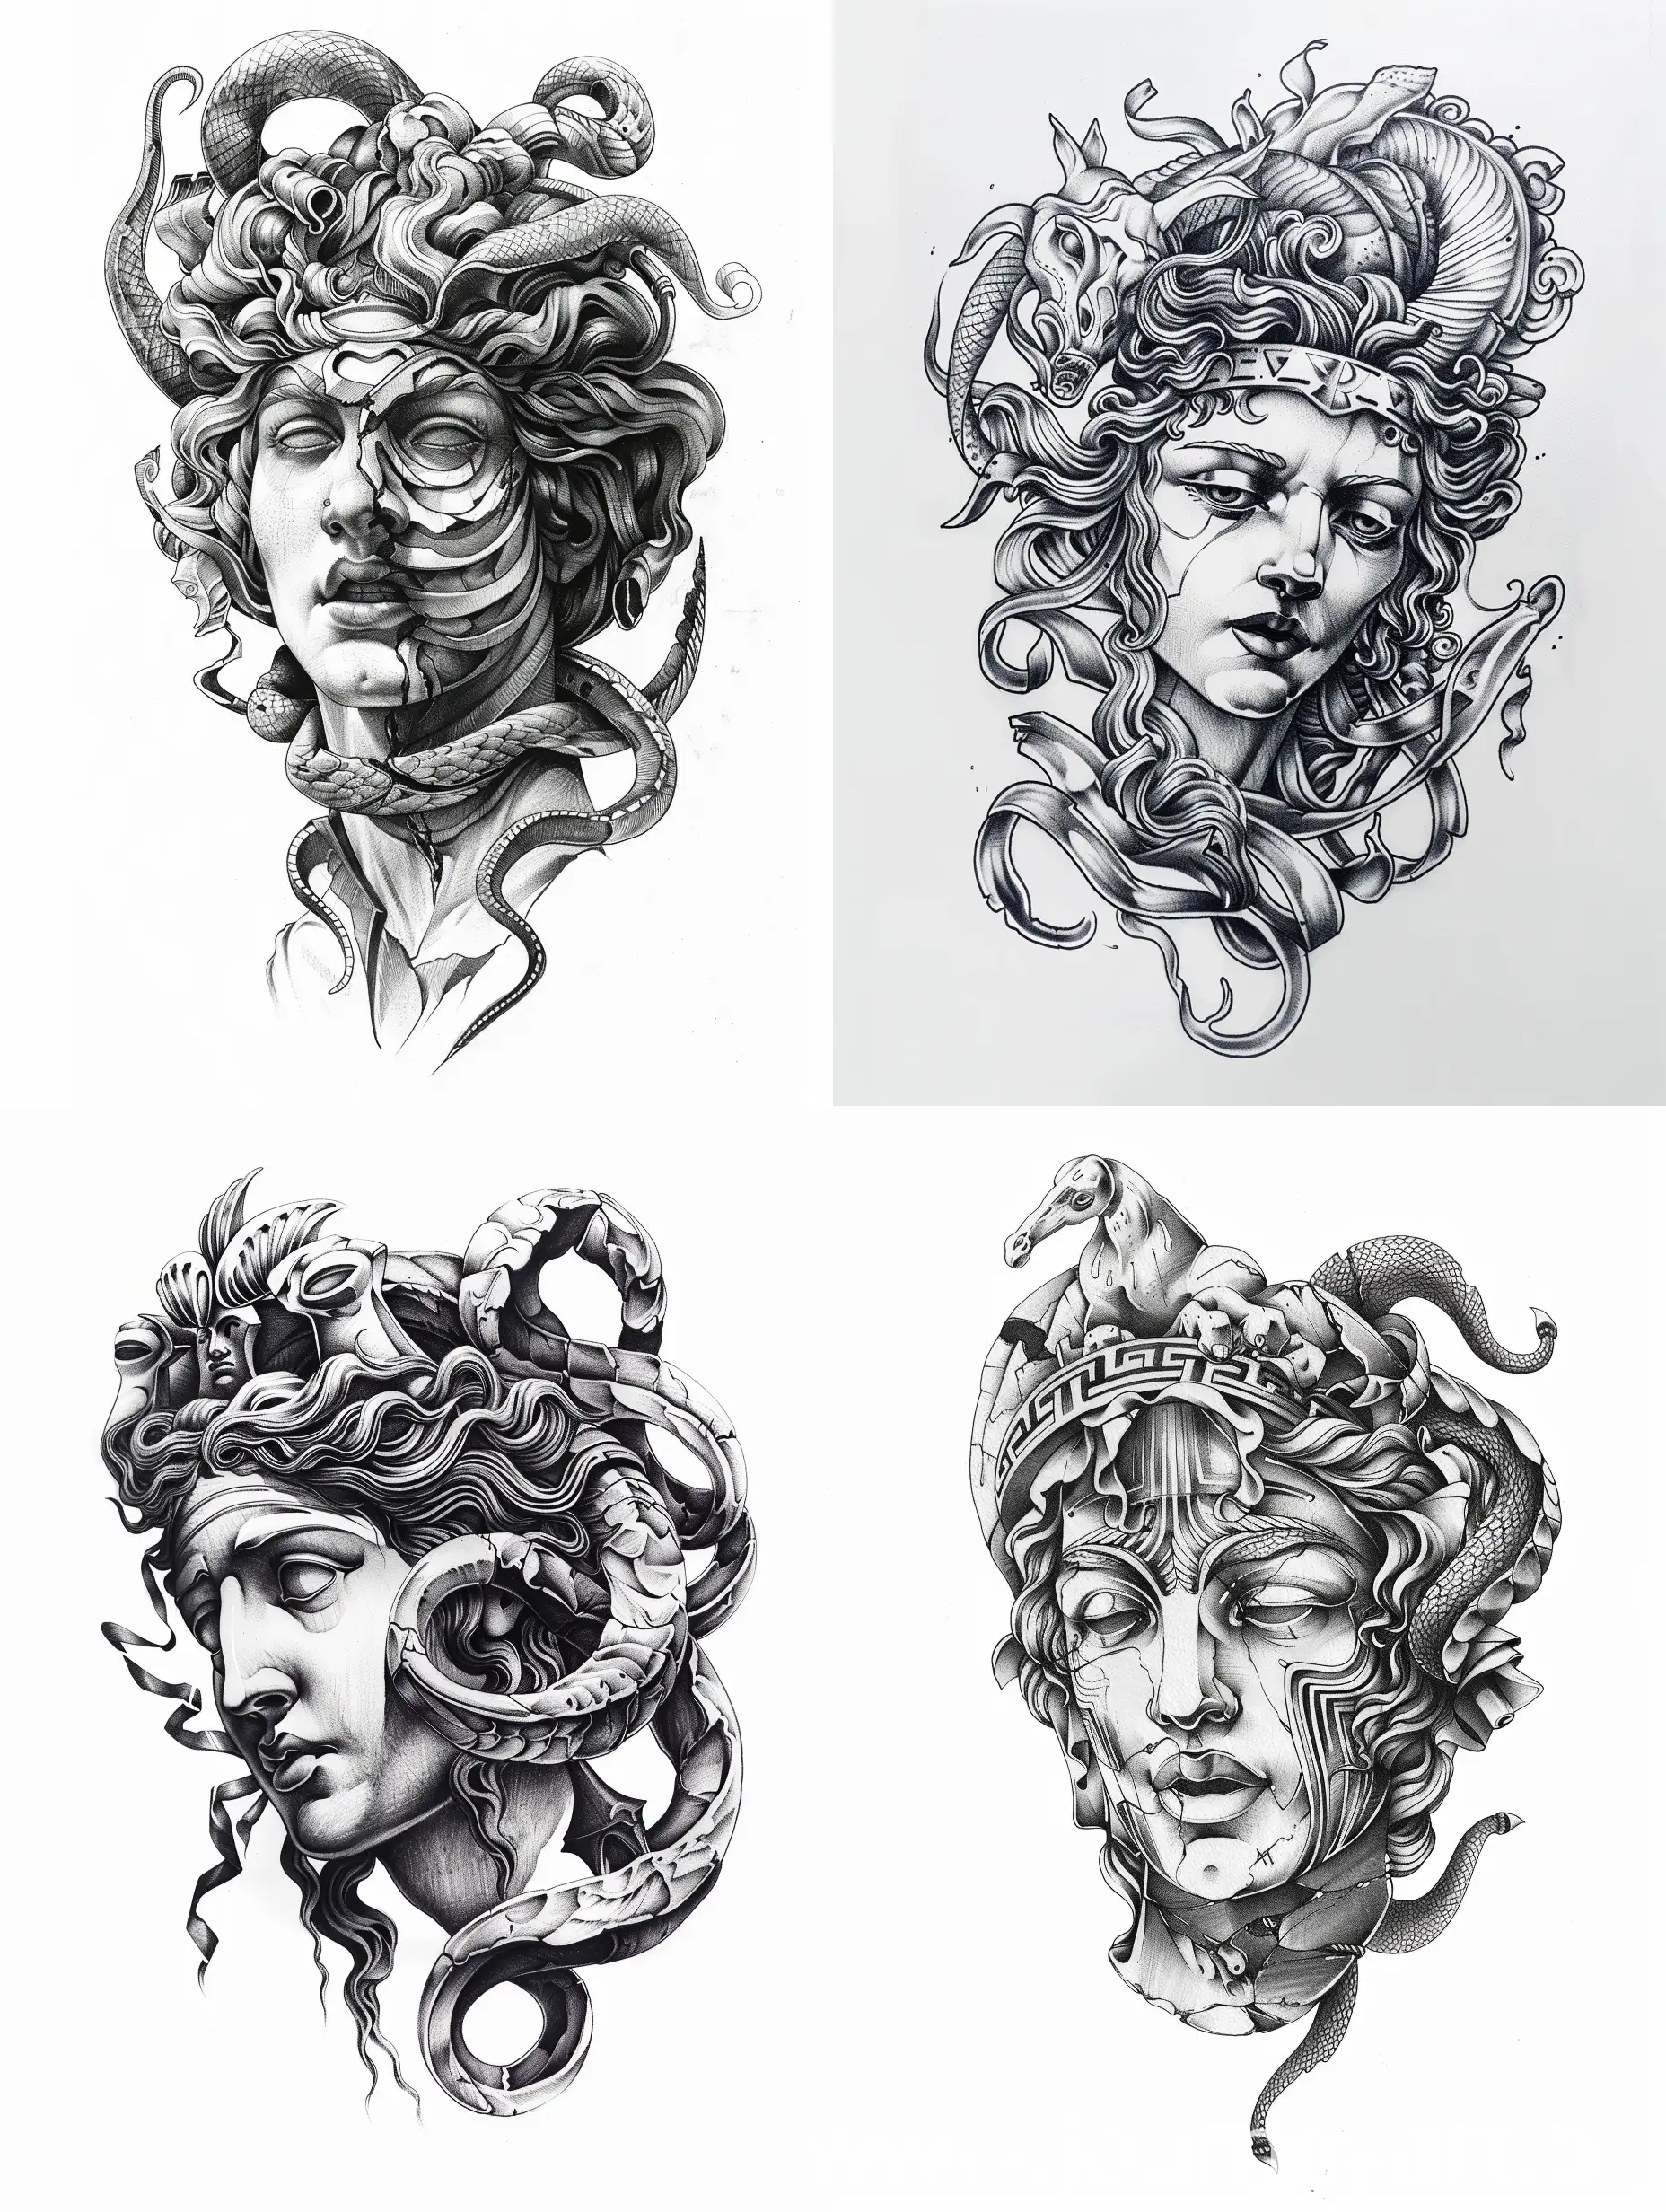 Medusa-Head-Statue-Tattoo-Design-Sketch-on-White-Background